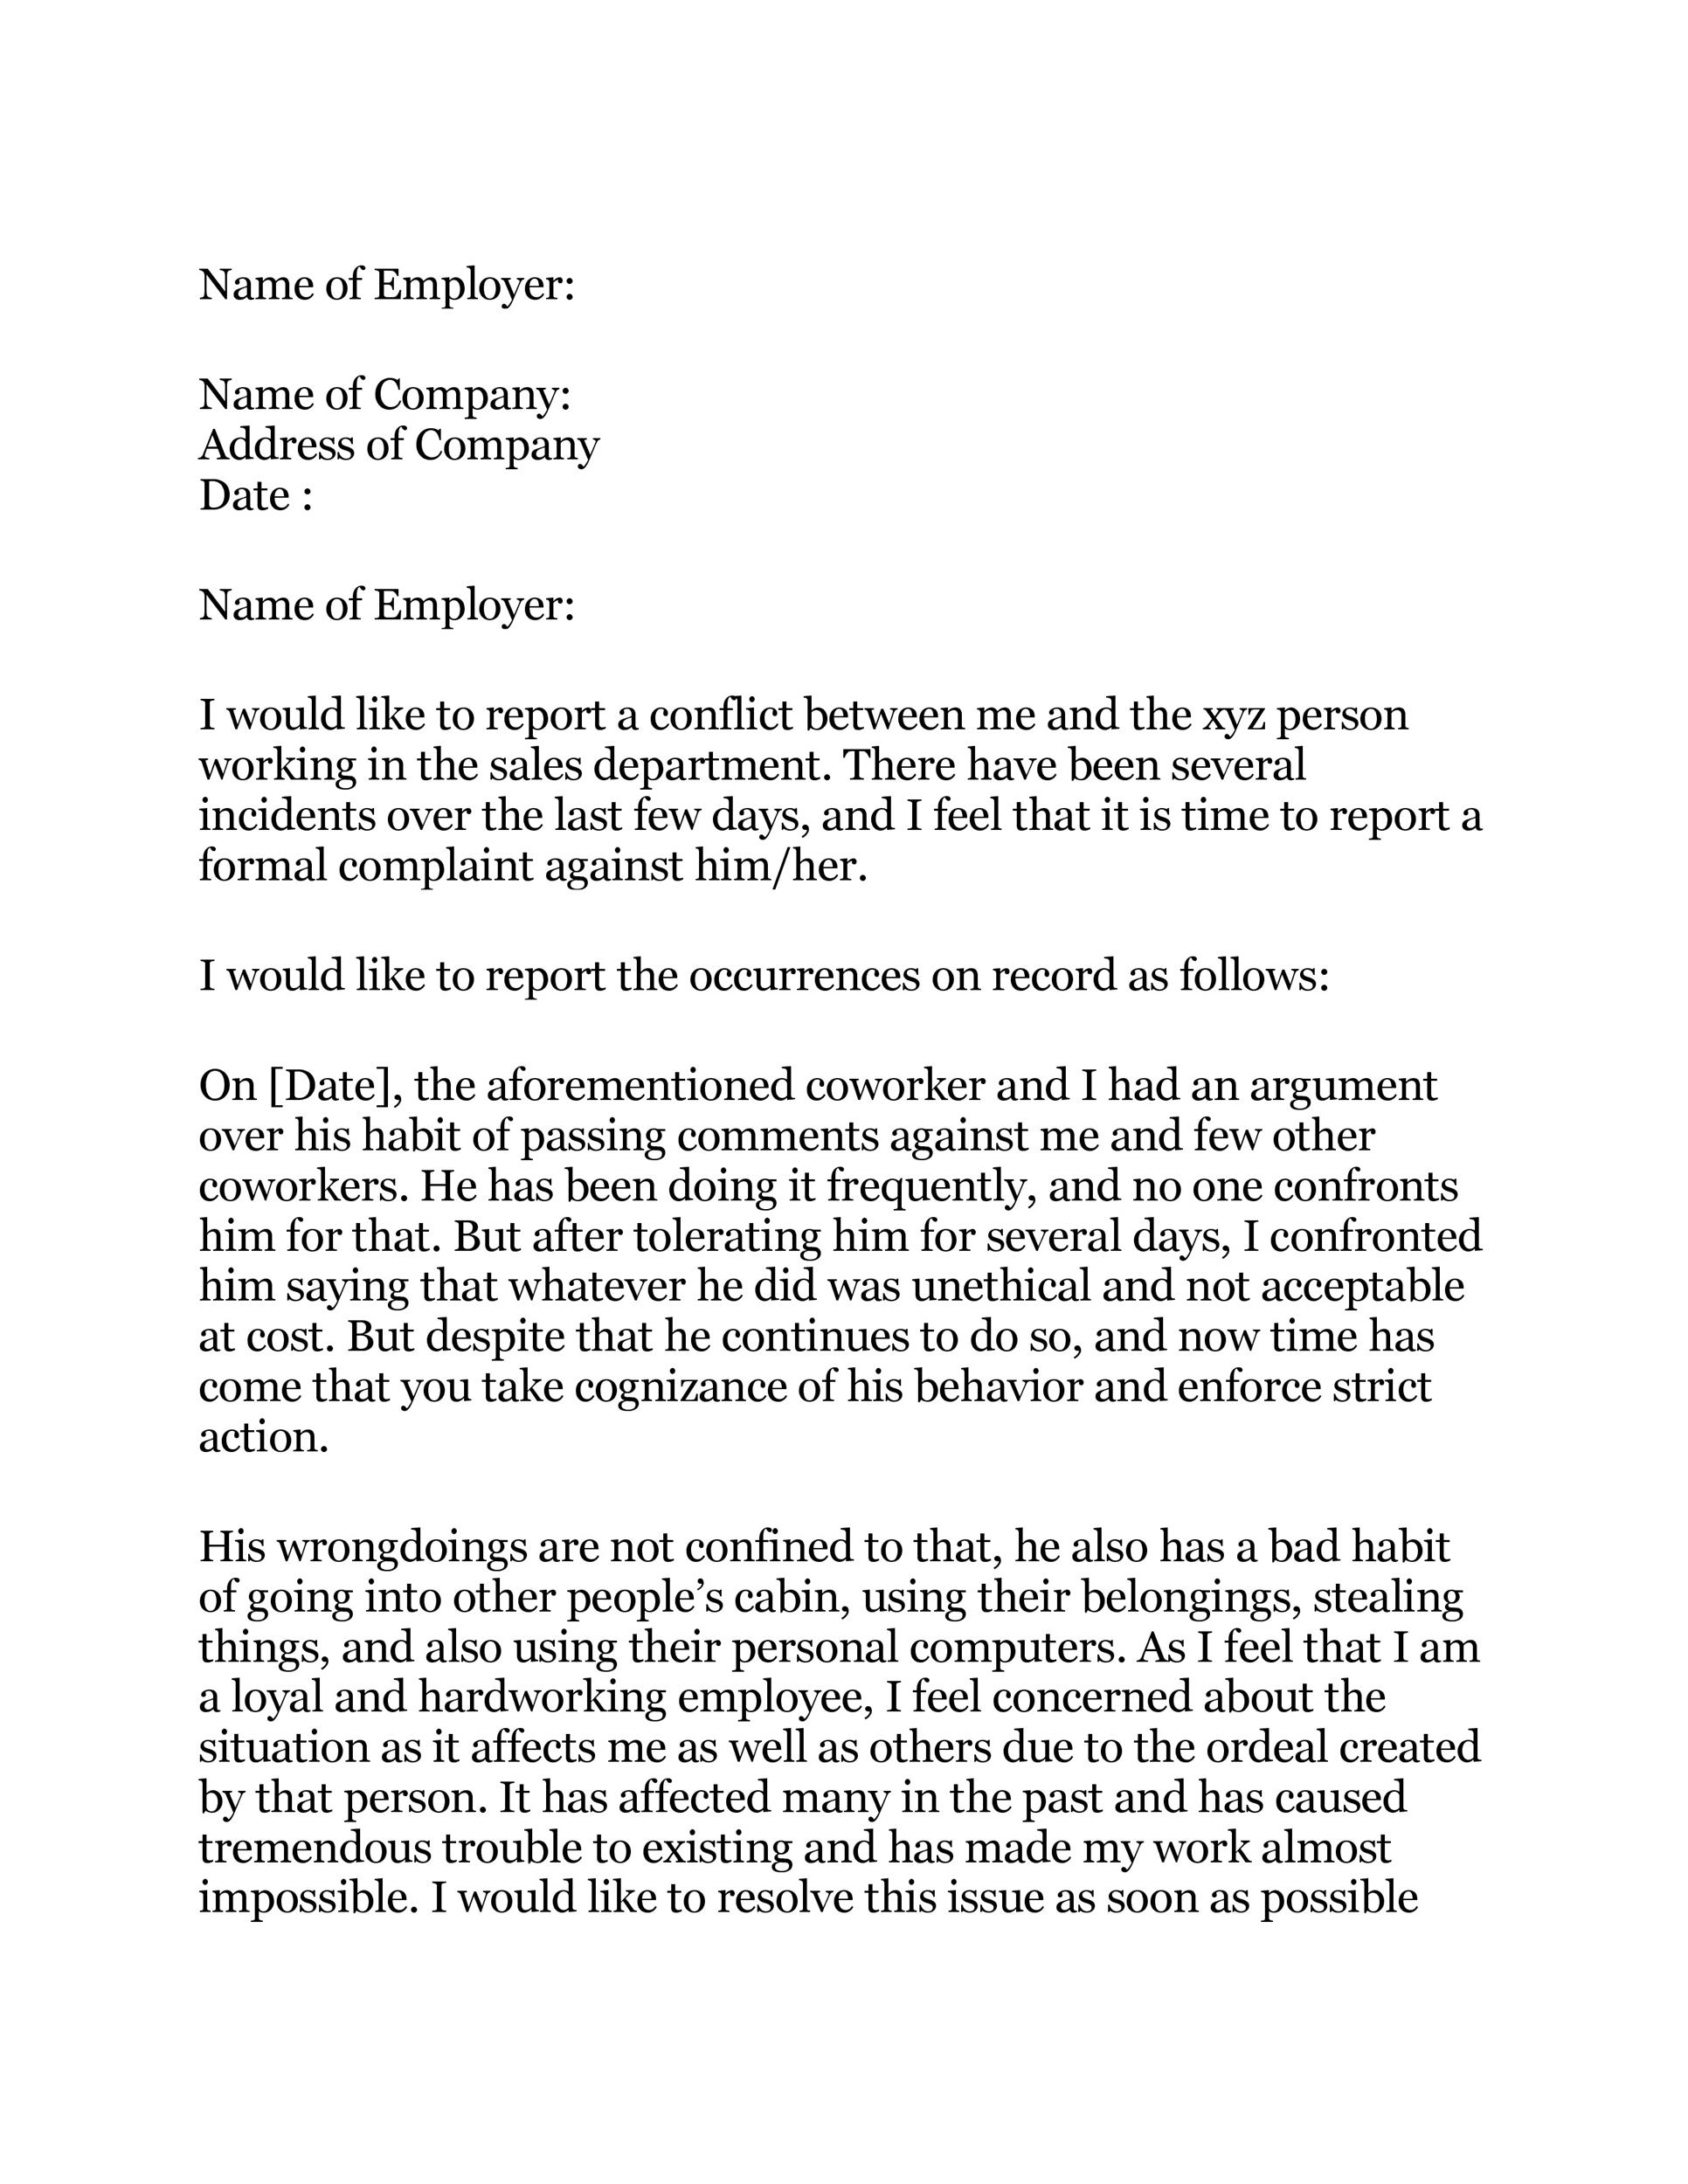 Sample Letter Of Discrimination Complaint from templatelab.com